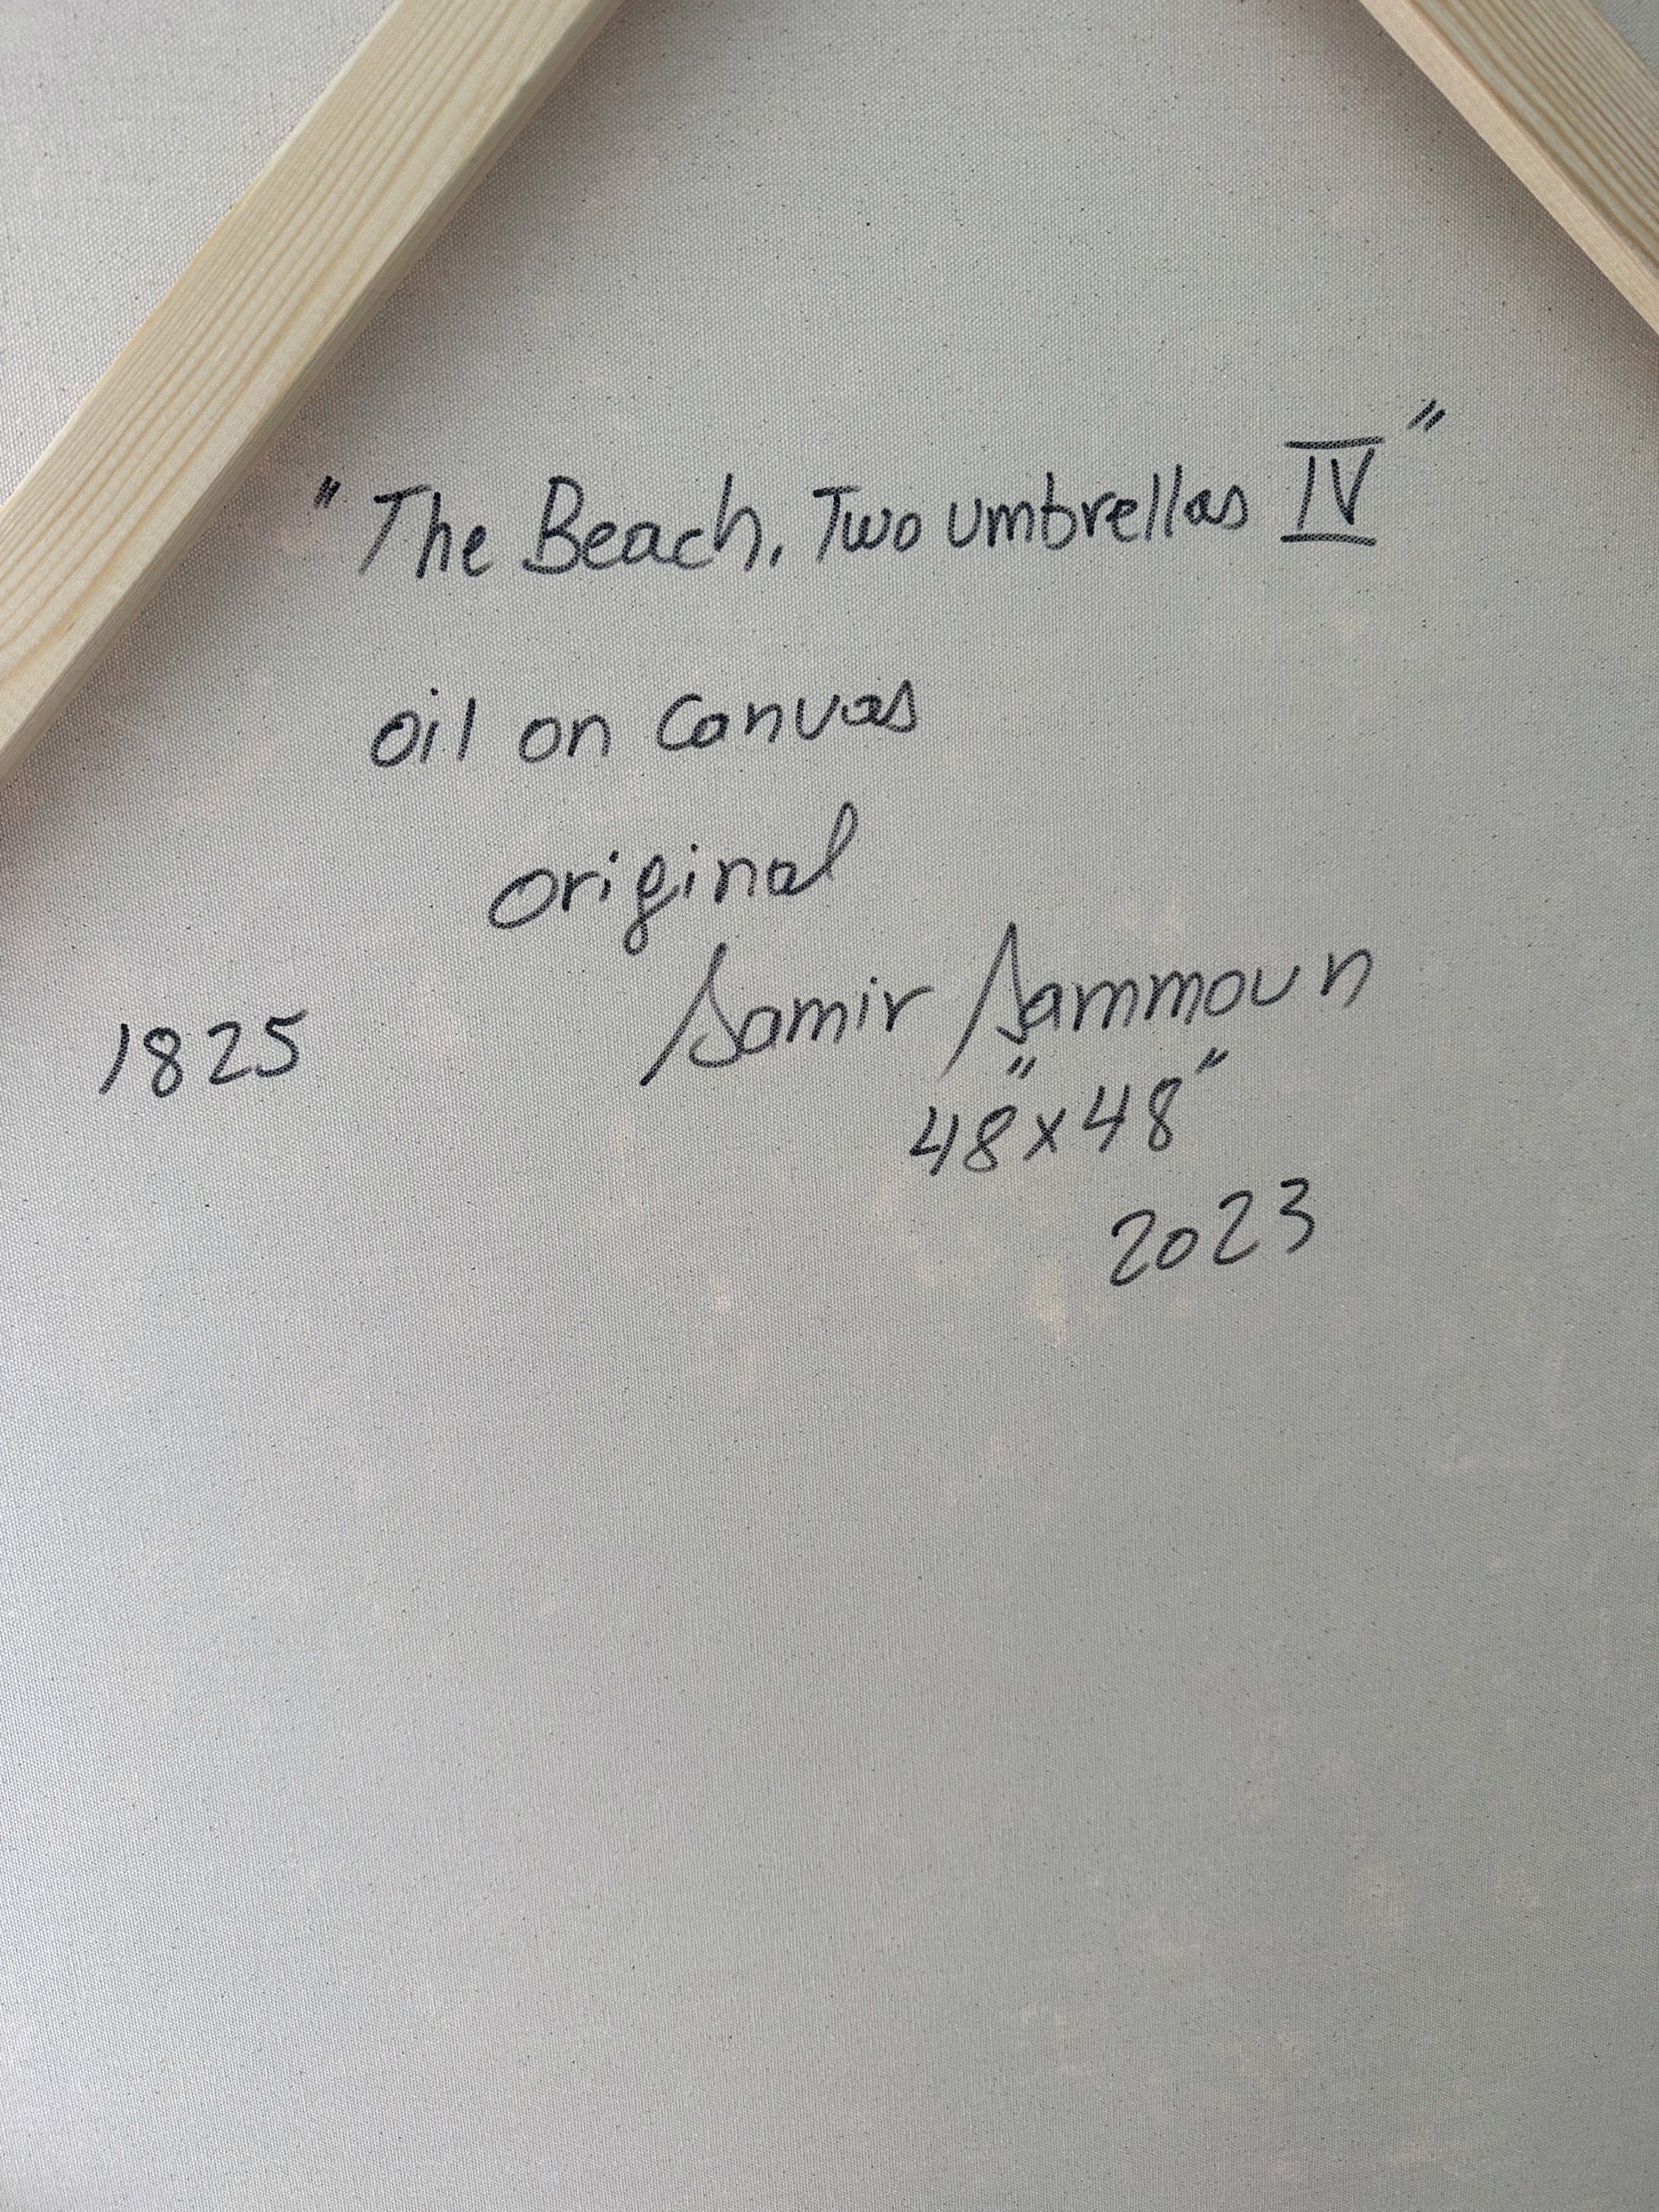 The beach, Two Umbrellas IV, 48x48 by Samir Sammoun